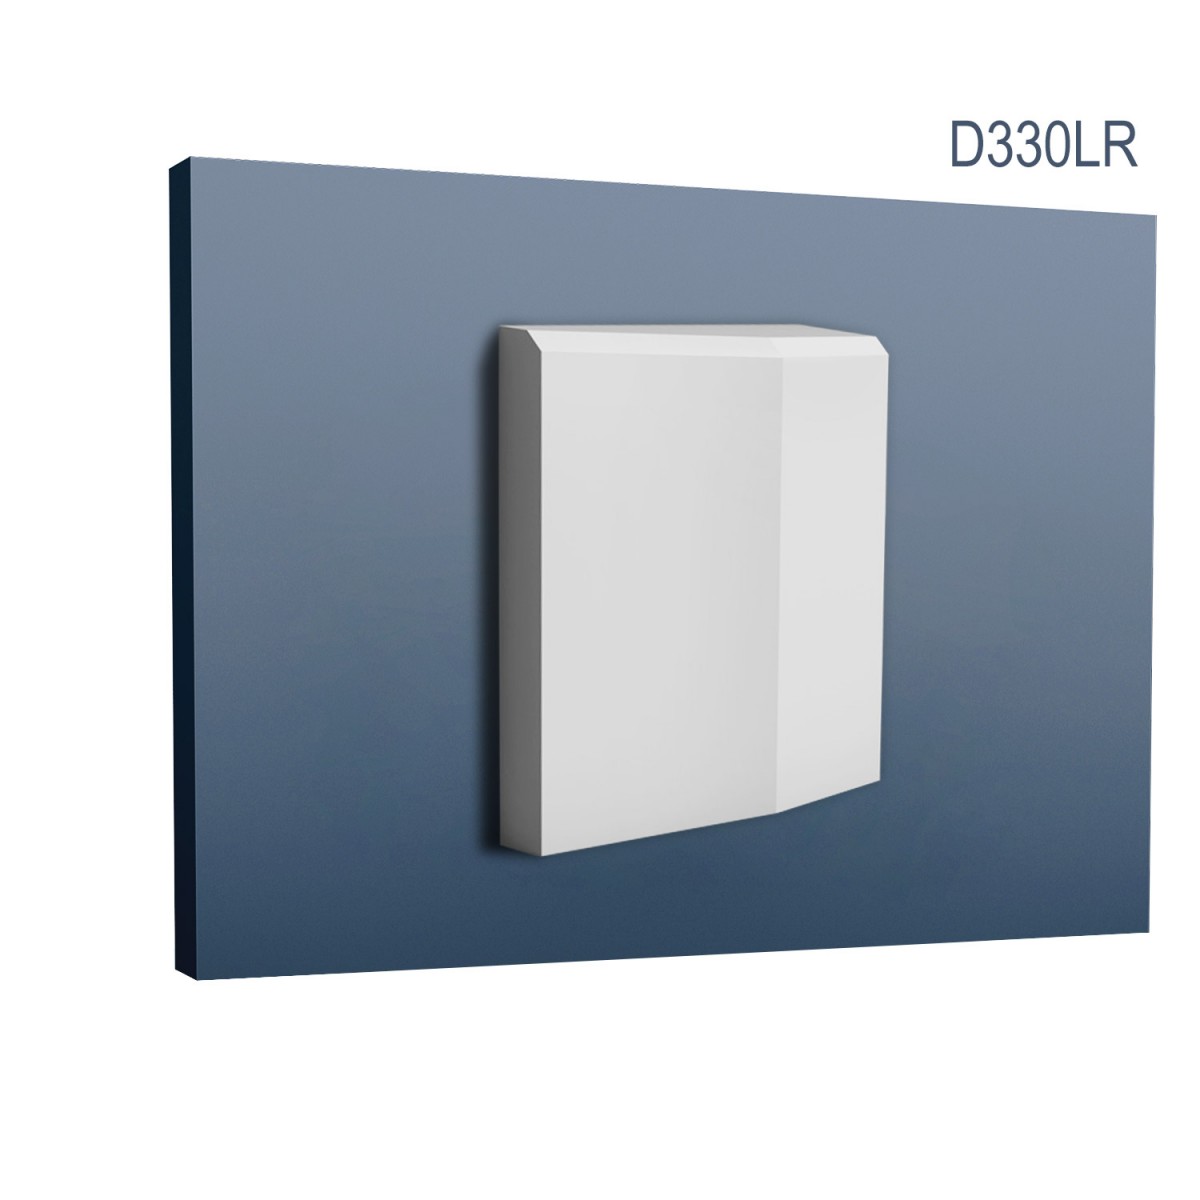 Profile Decorative Orac Decor ORC-D330LR, material: Duropolimer